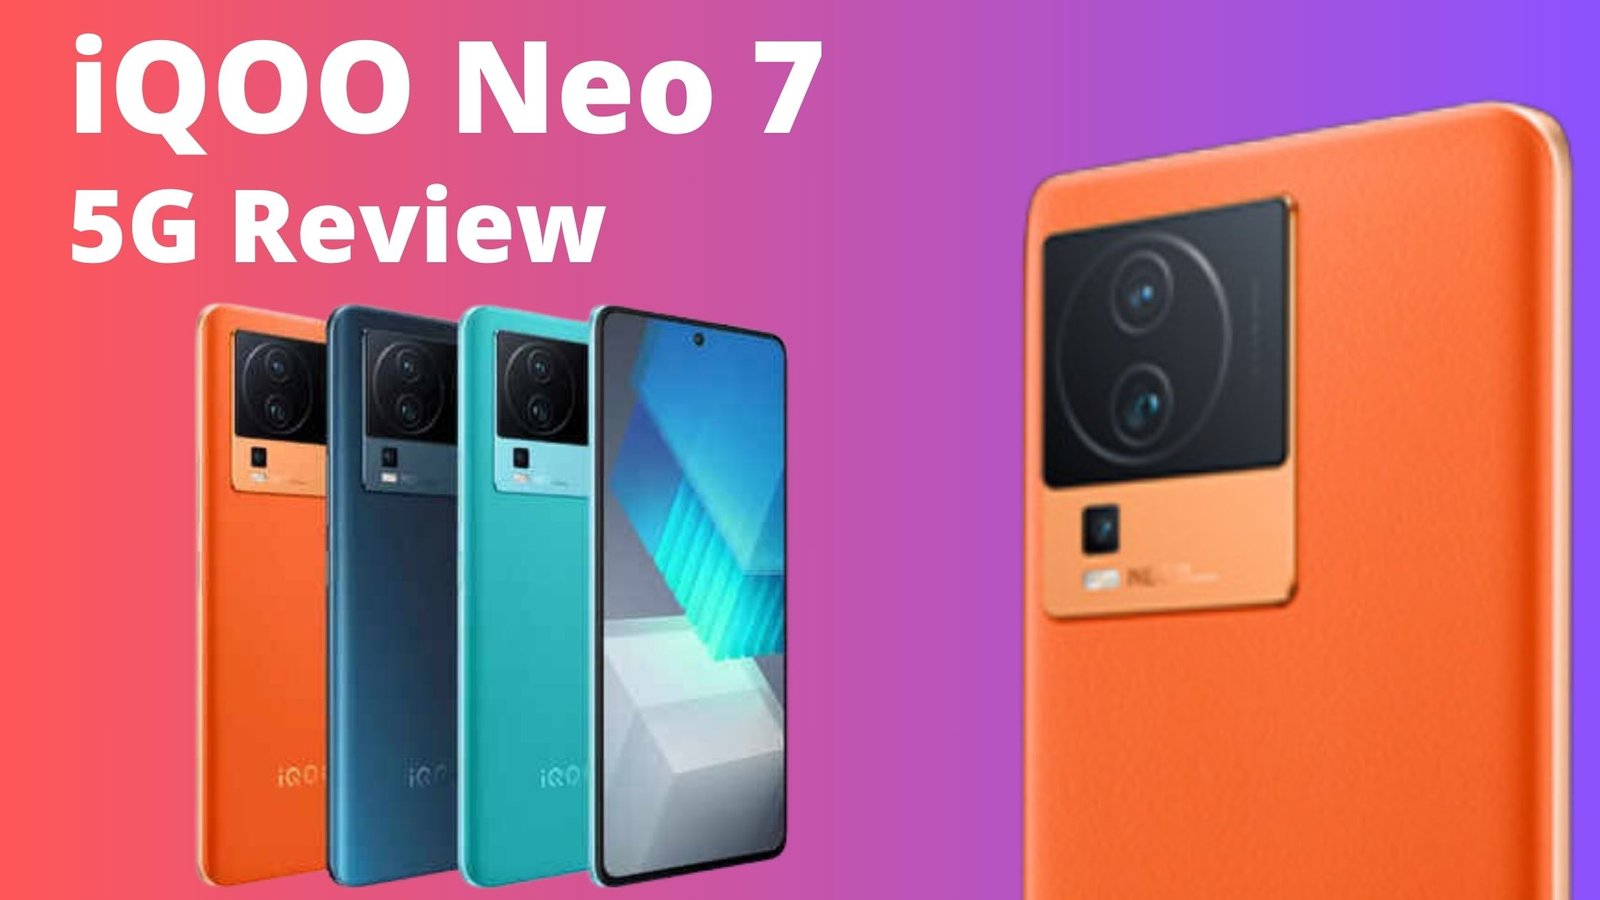 iQOO Neo 7 5G Review, जाने Specs and Price